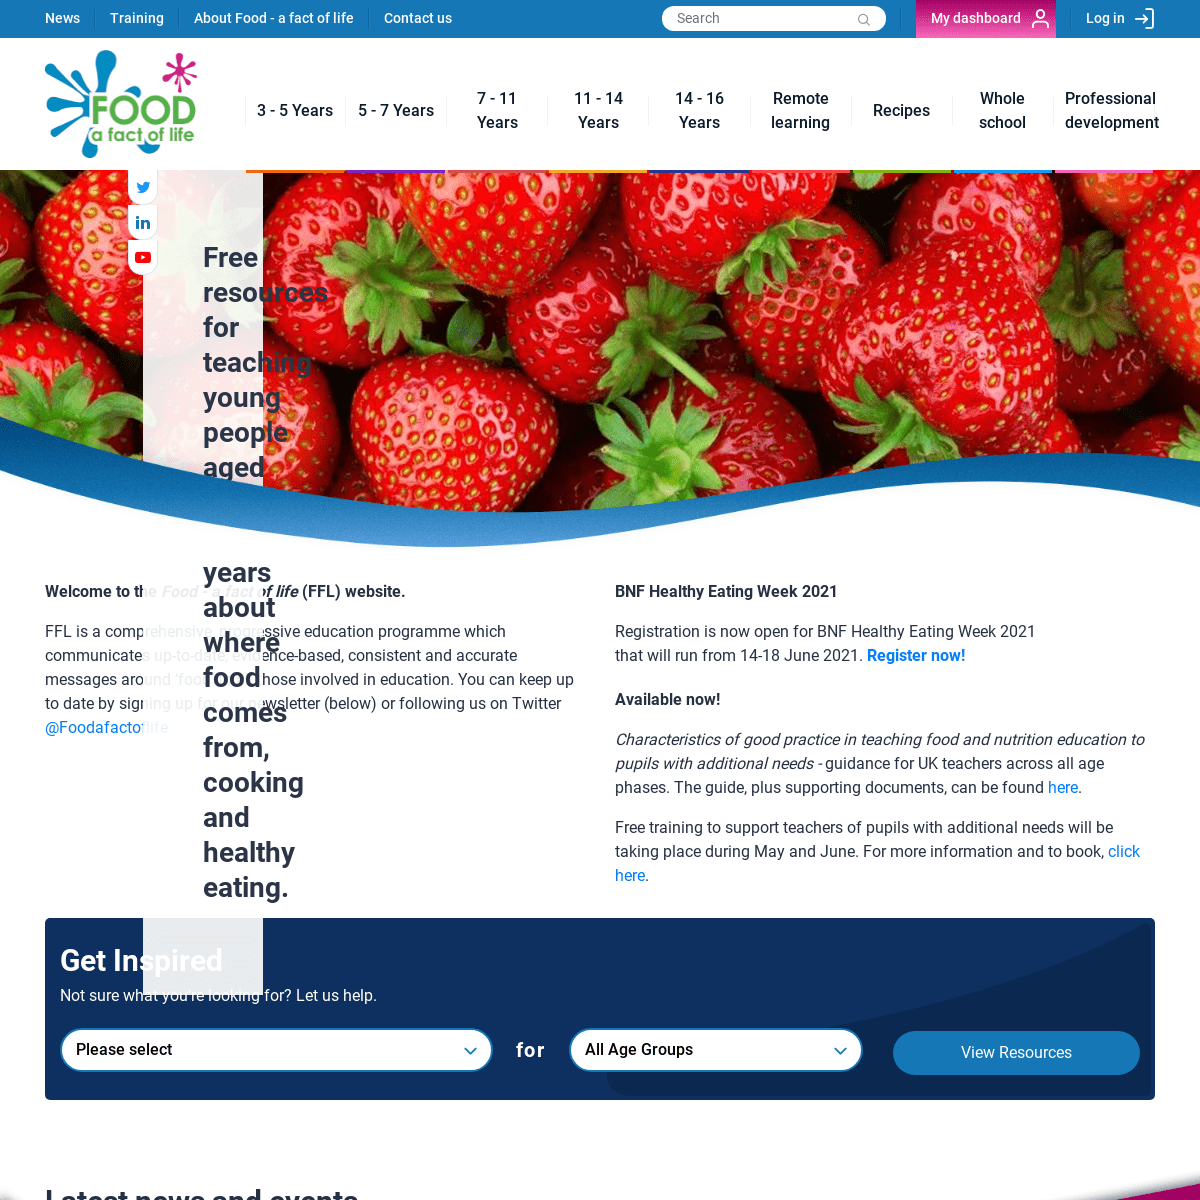 A complete backup of https://foodafactoflife.org.uk